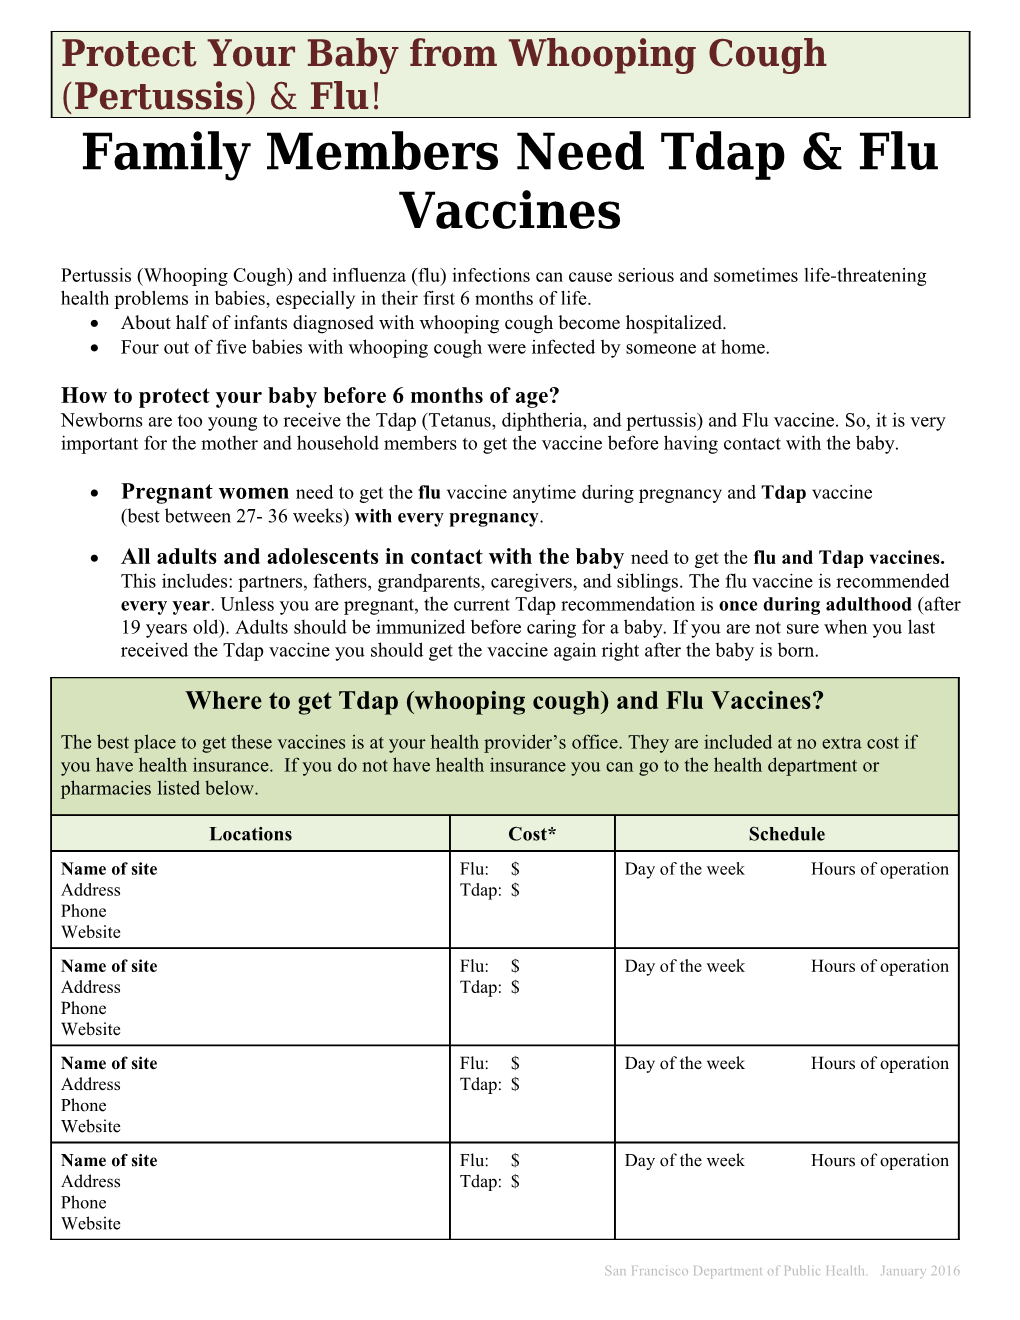 Family Members Need Tdap Flu Vaccines